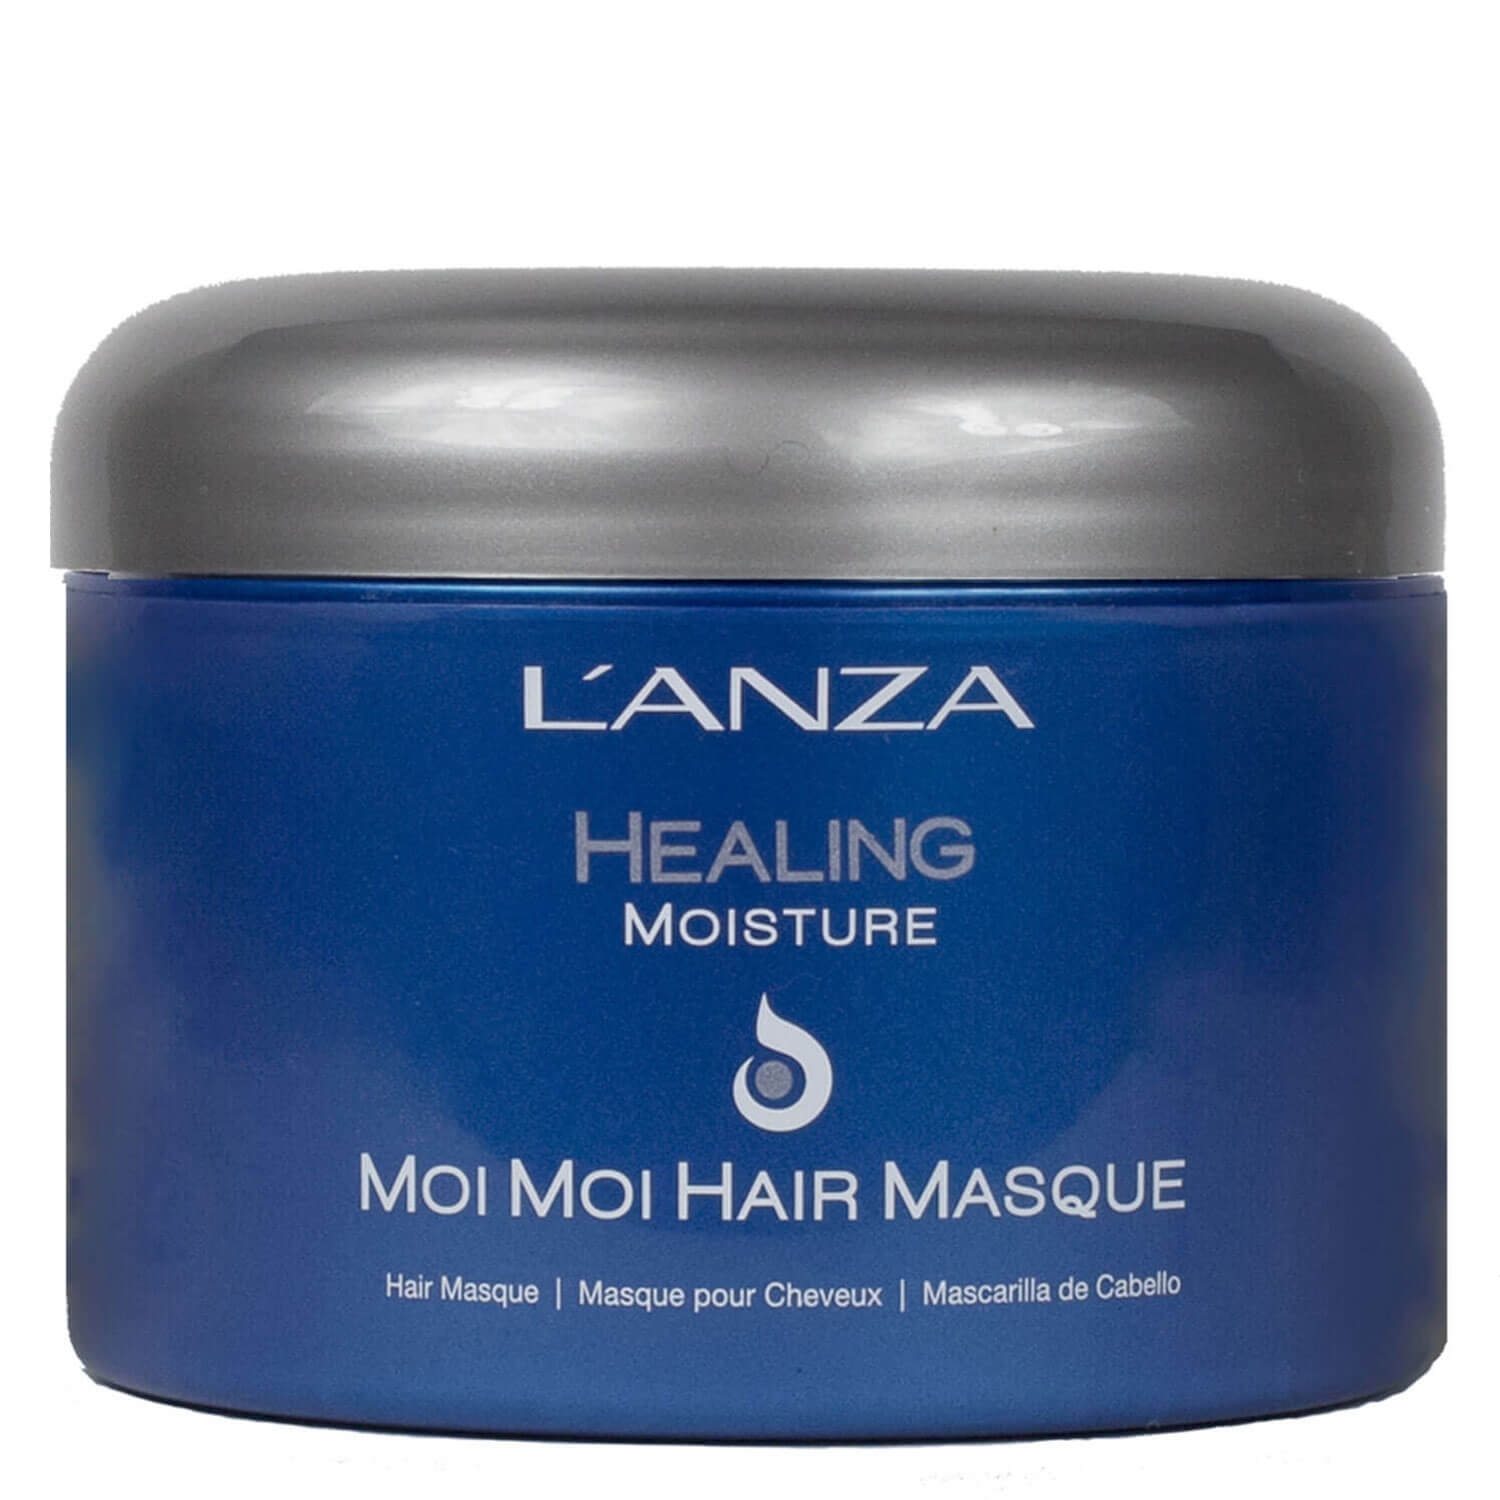 Produktbild von Healing Moisture - Moi Moi Hair Masque